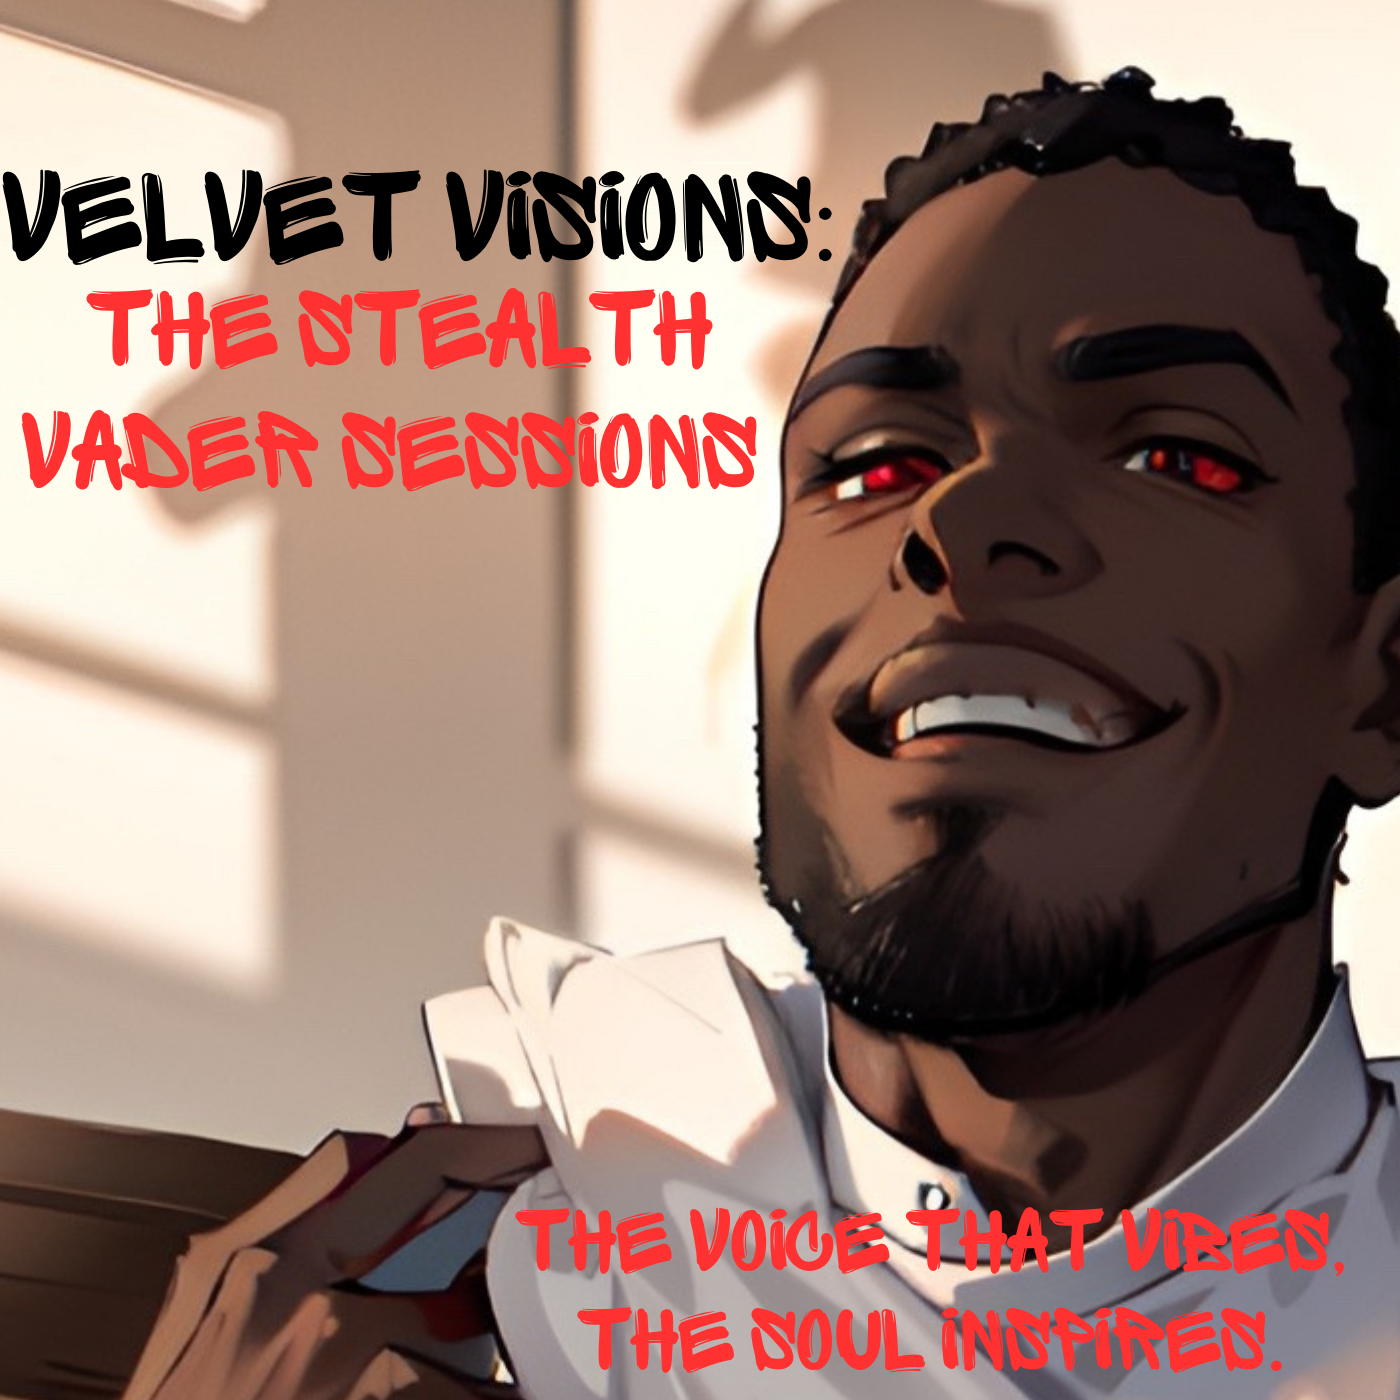 Artwork for Velvet Visions: The Stealth Vader Sessions